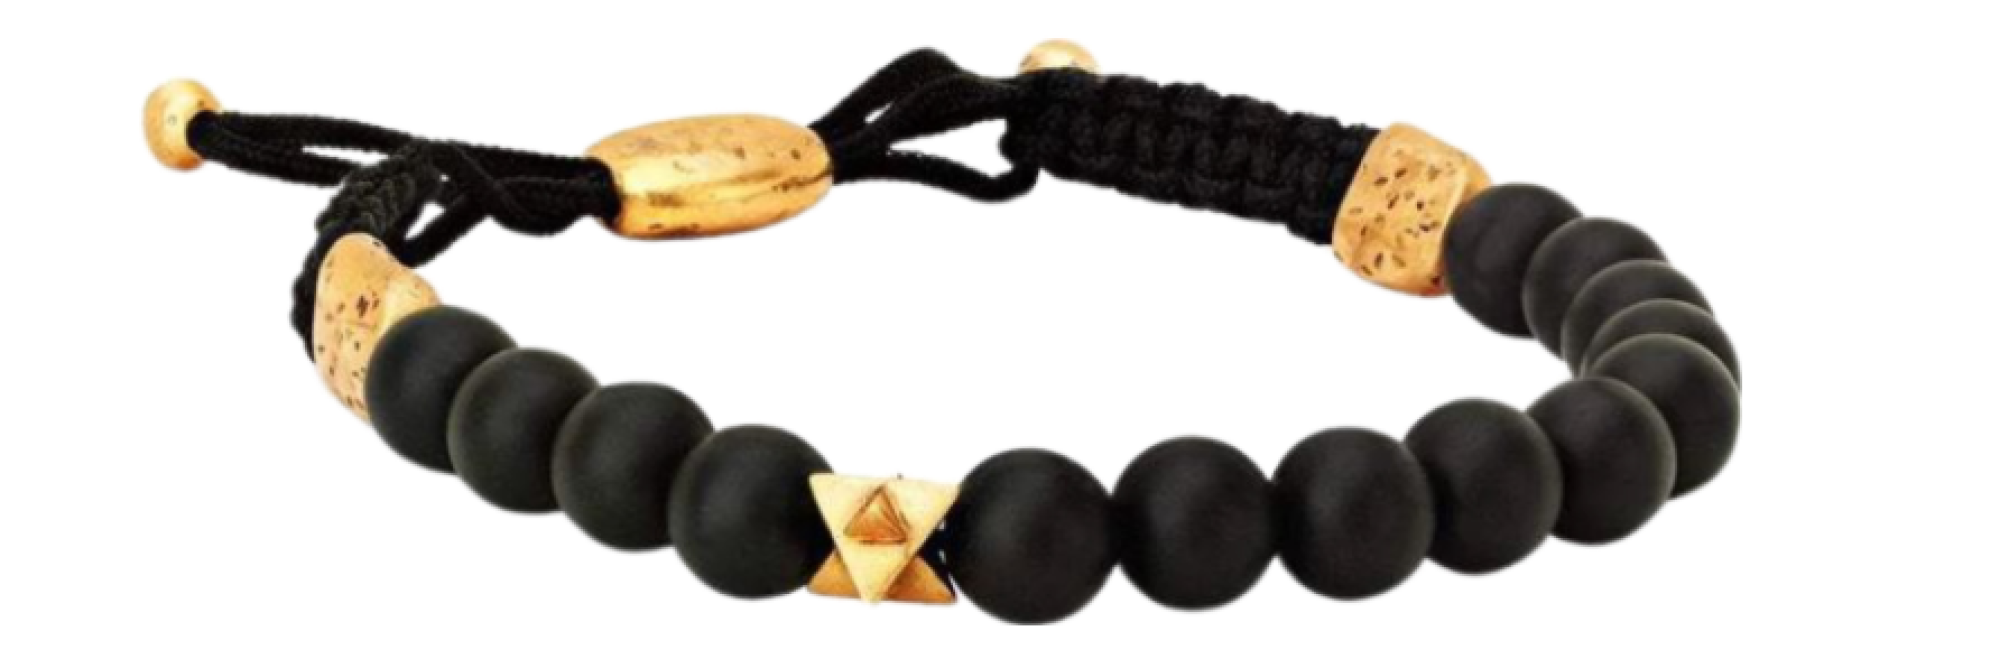 Logan Hollowell's mala bead bracelet featuring a pyramid-shaped brass merkaba bead